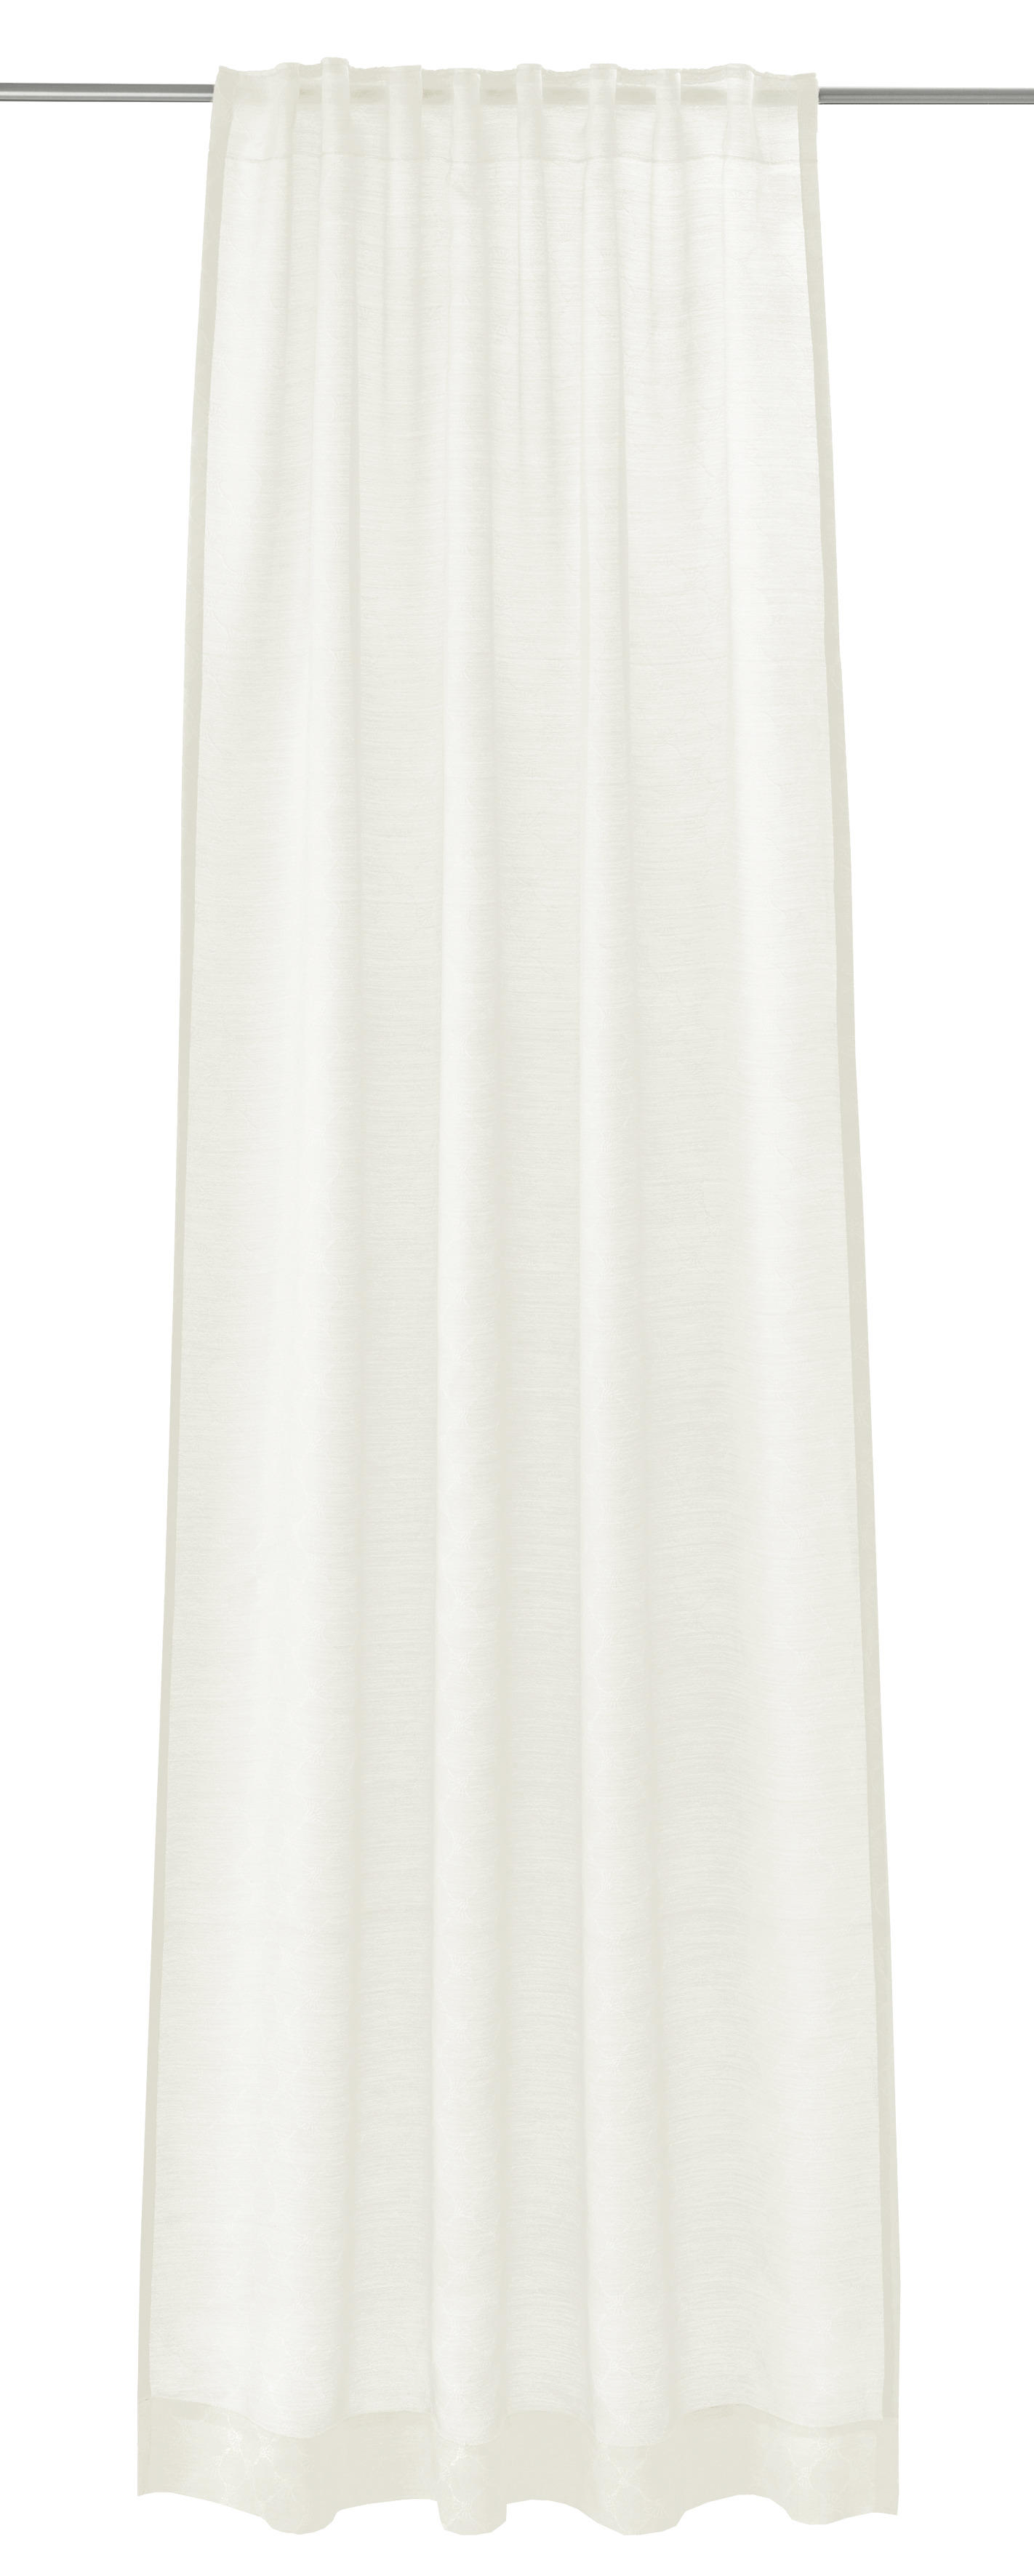 FERTIGVORHANG Glare transparent 130/250 cm   - Weiß, Basics, Textil (130/250cm) - Joop!